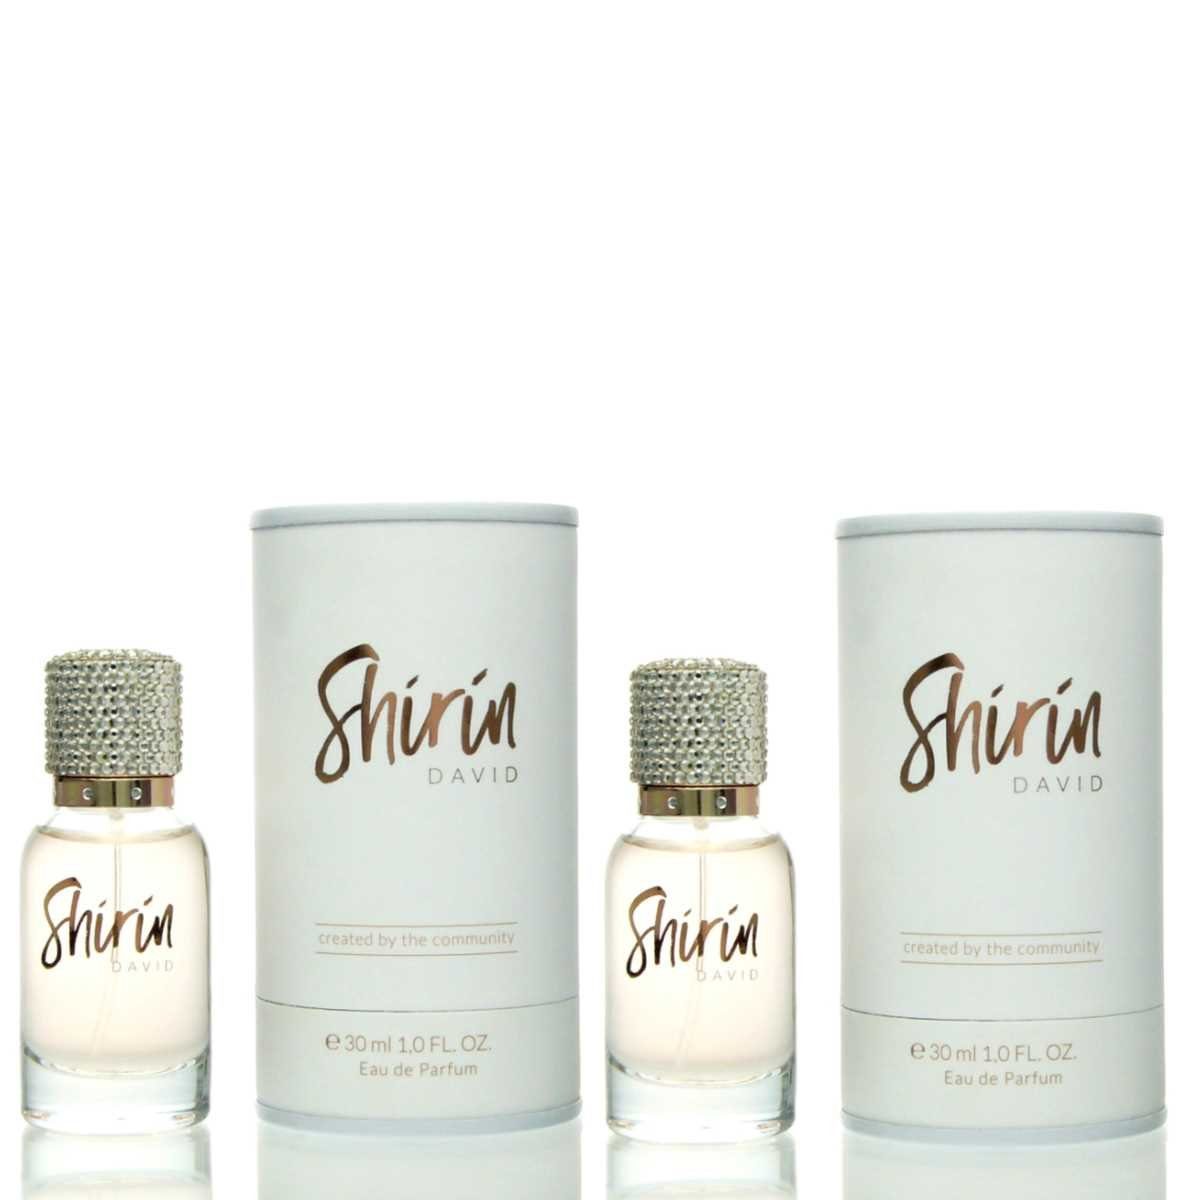 Shirin David Eau de Parfum 2x Shirin David created by the community Eau de Parfum 30 ml